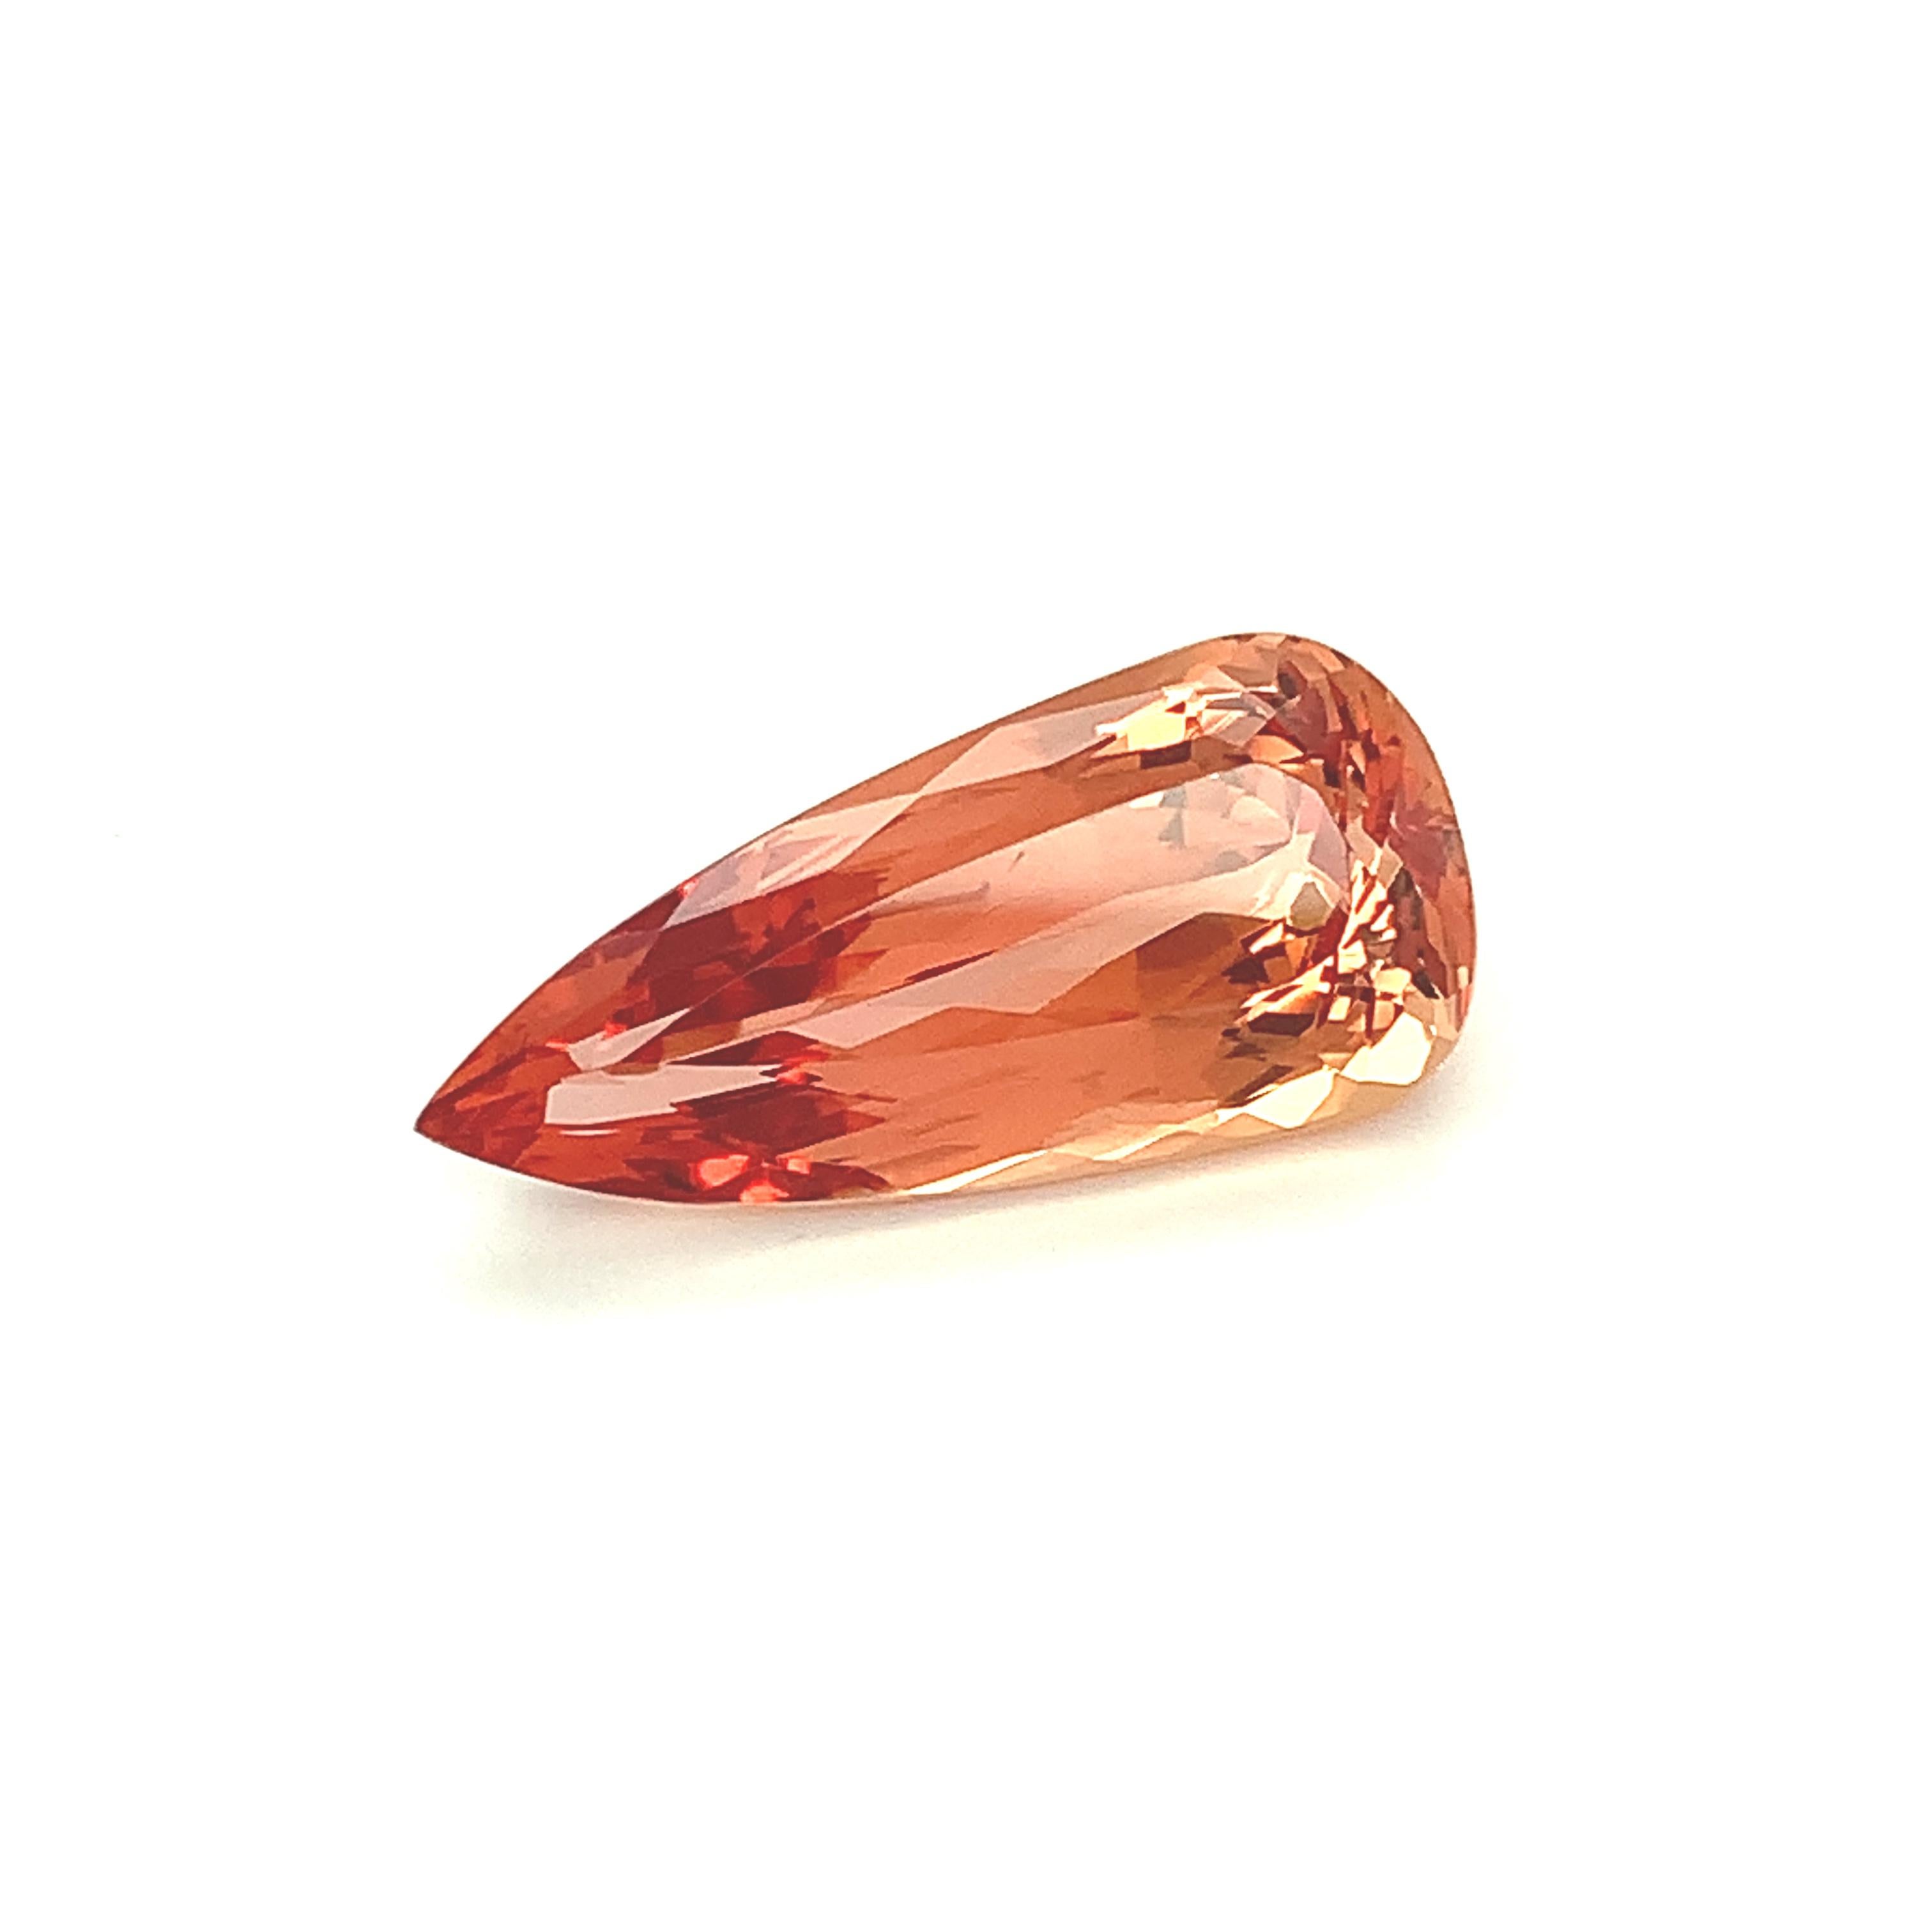 Topaze impériale orange 15,90 carats, pierre précieuse non sertie, certifiée GIA en vente 6